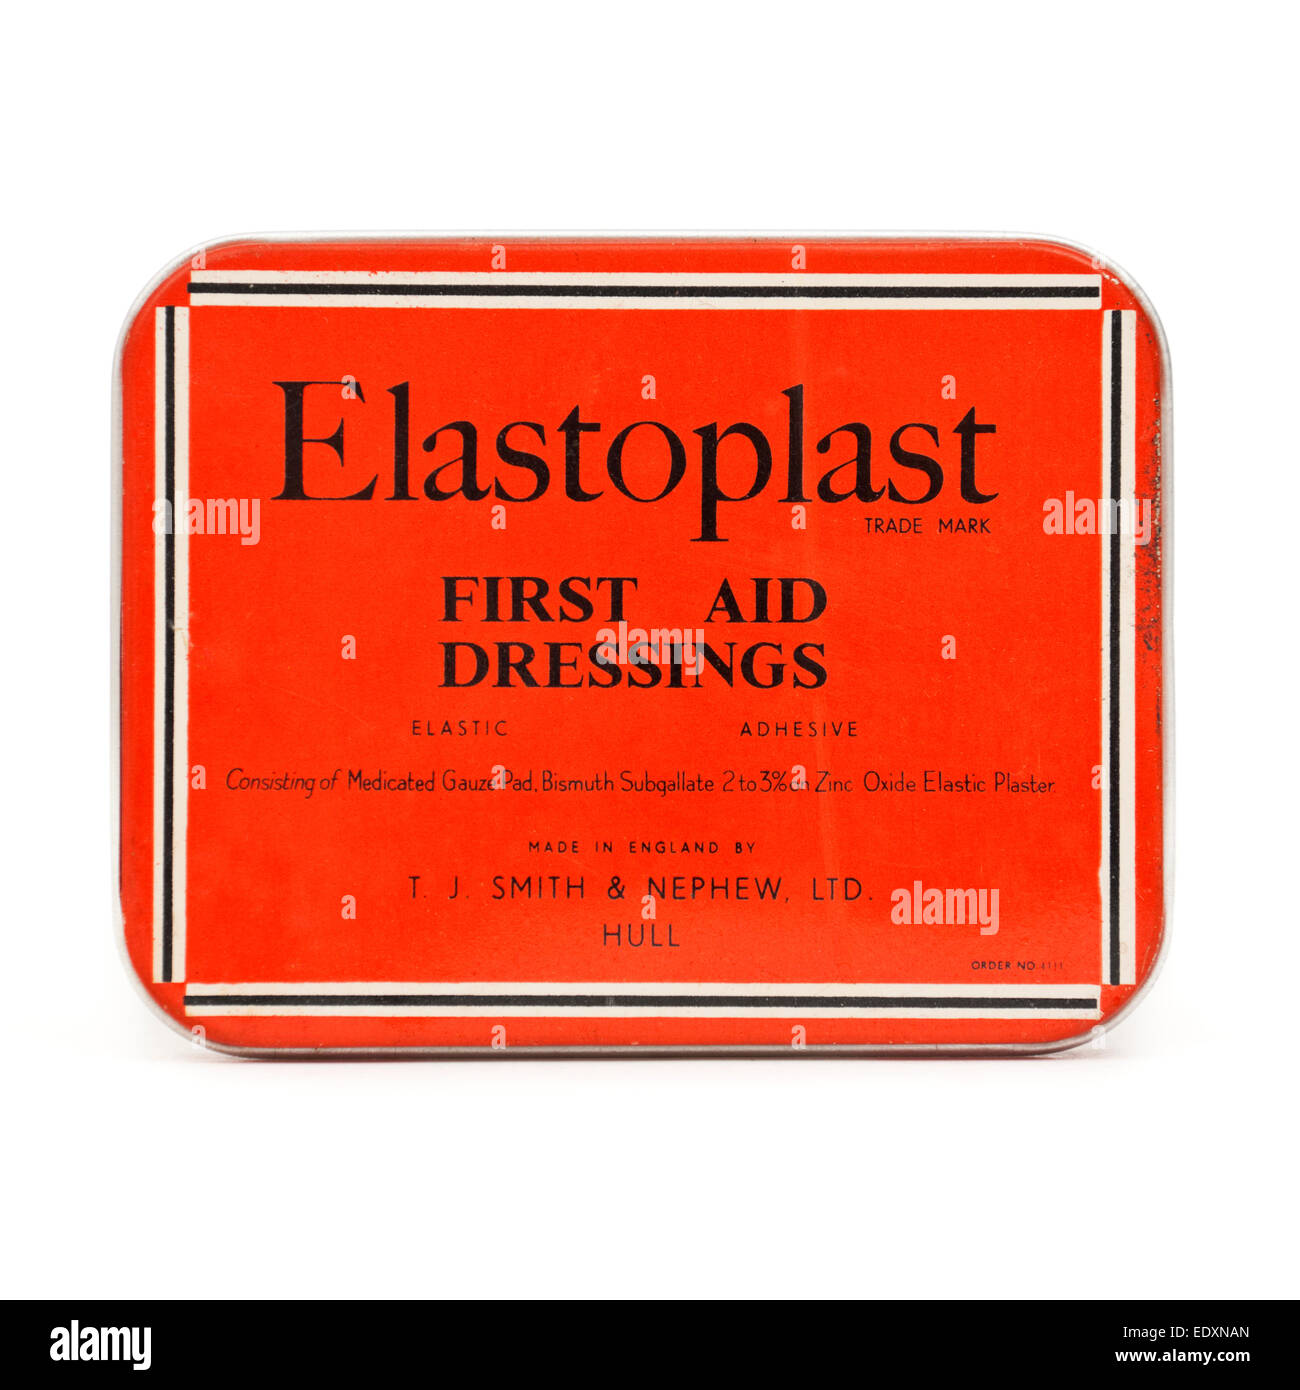 Elastoplast Fabric Plaster Strips 100 Pack, Plaster, Bandages & Dressings, First Aid, Health & Beauty